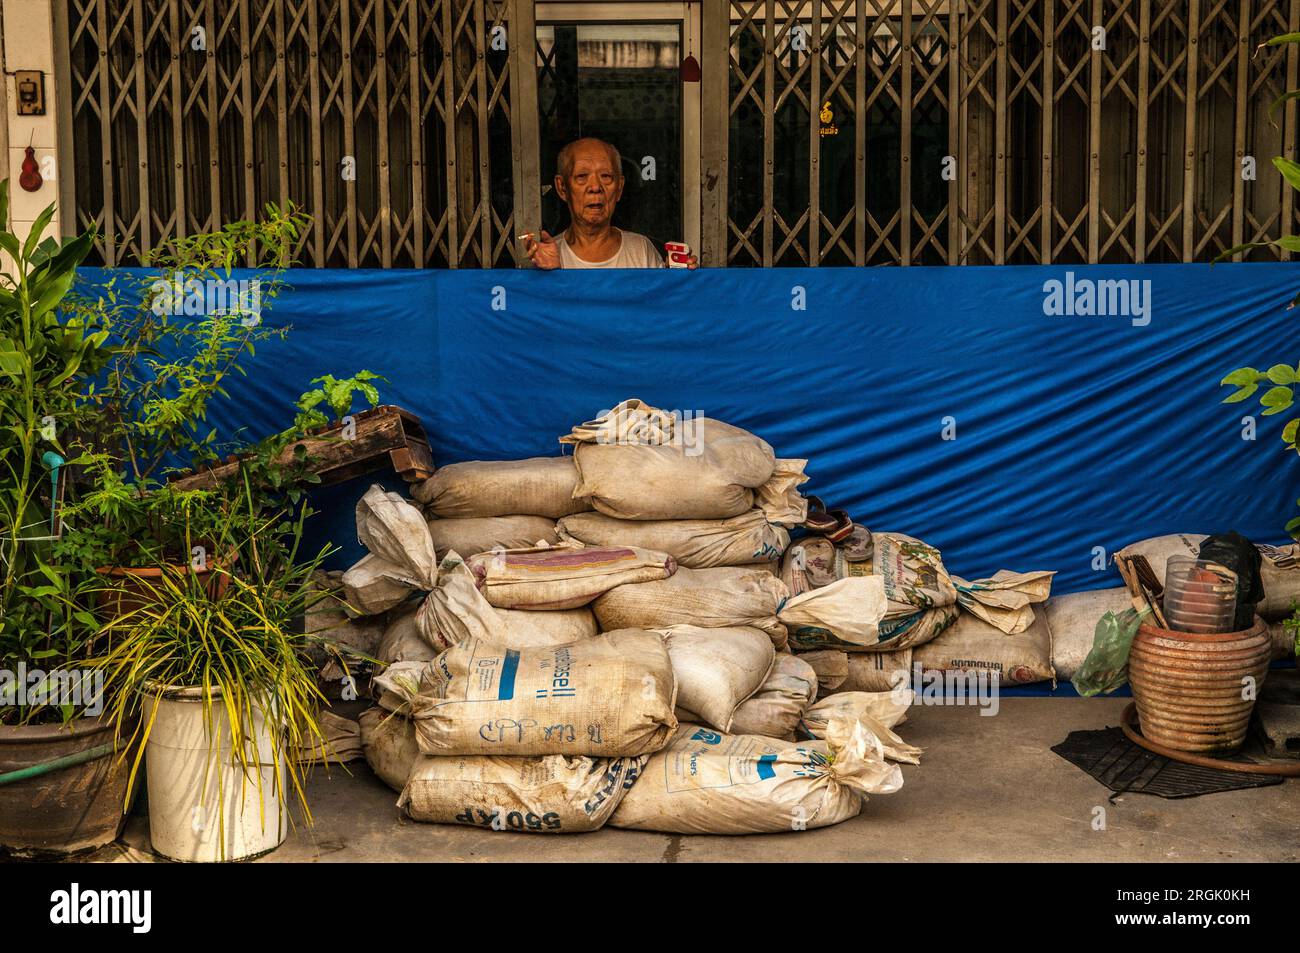 An elderly Bangkok resident prepares for the flood w/ sandbags in front of his shophouse, Sukhumvit Road, Bangkok, Thailand. credit: Kraig Lieb Stock Photo